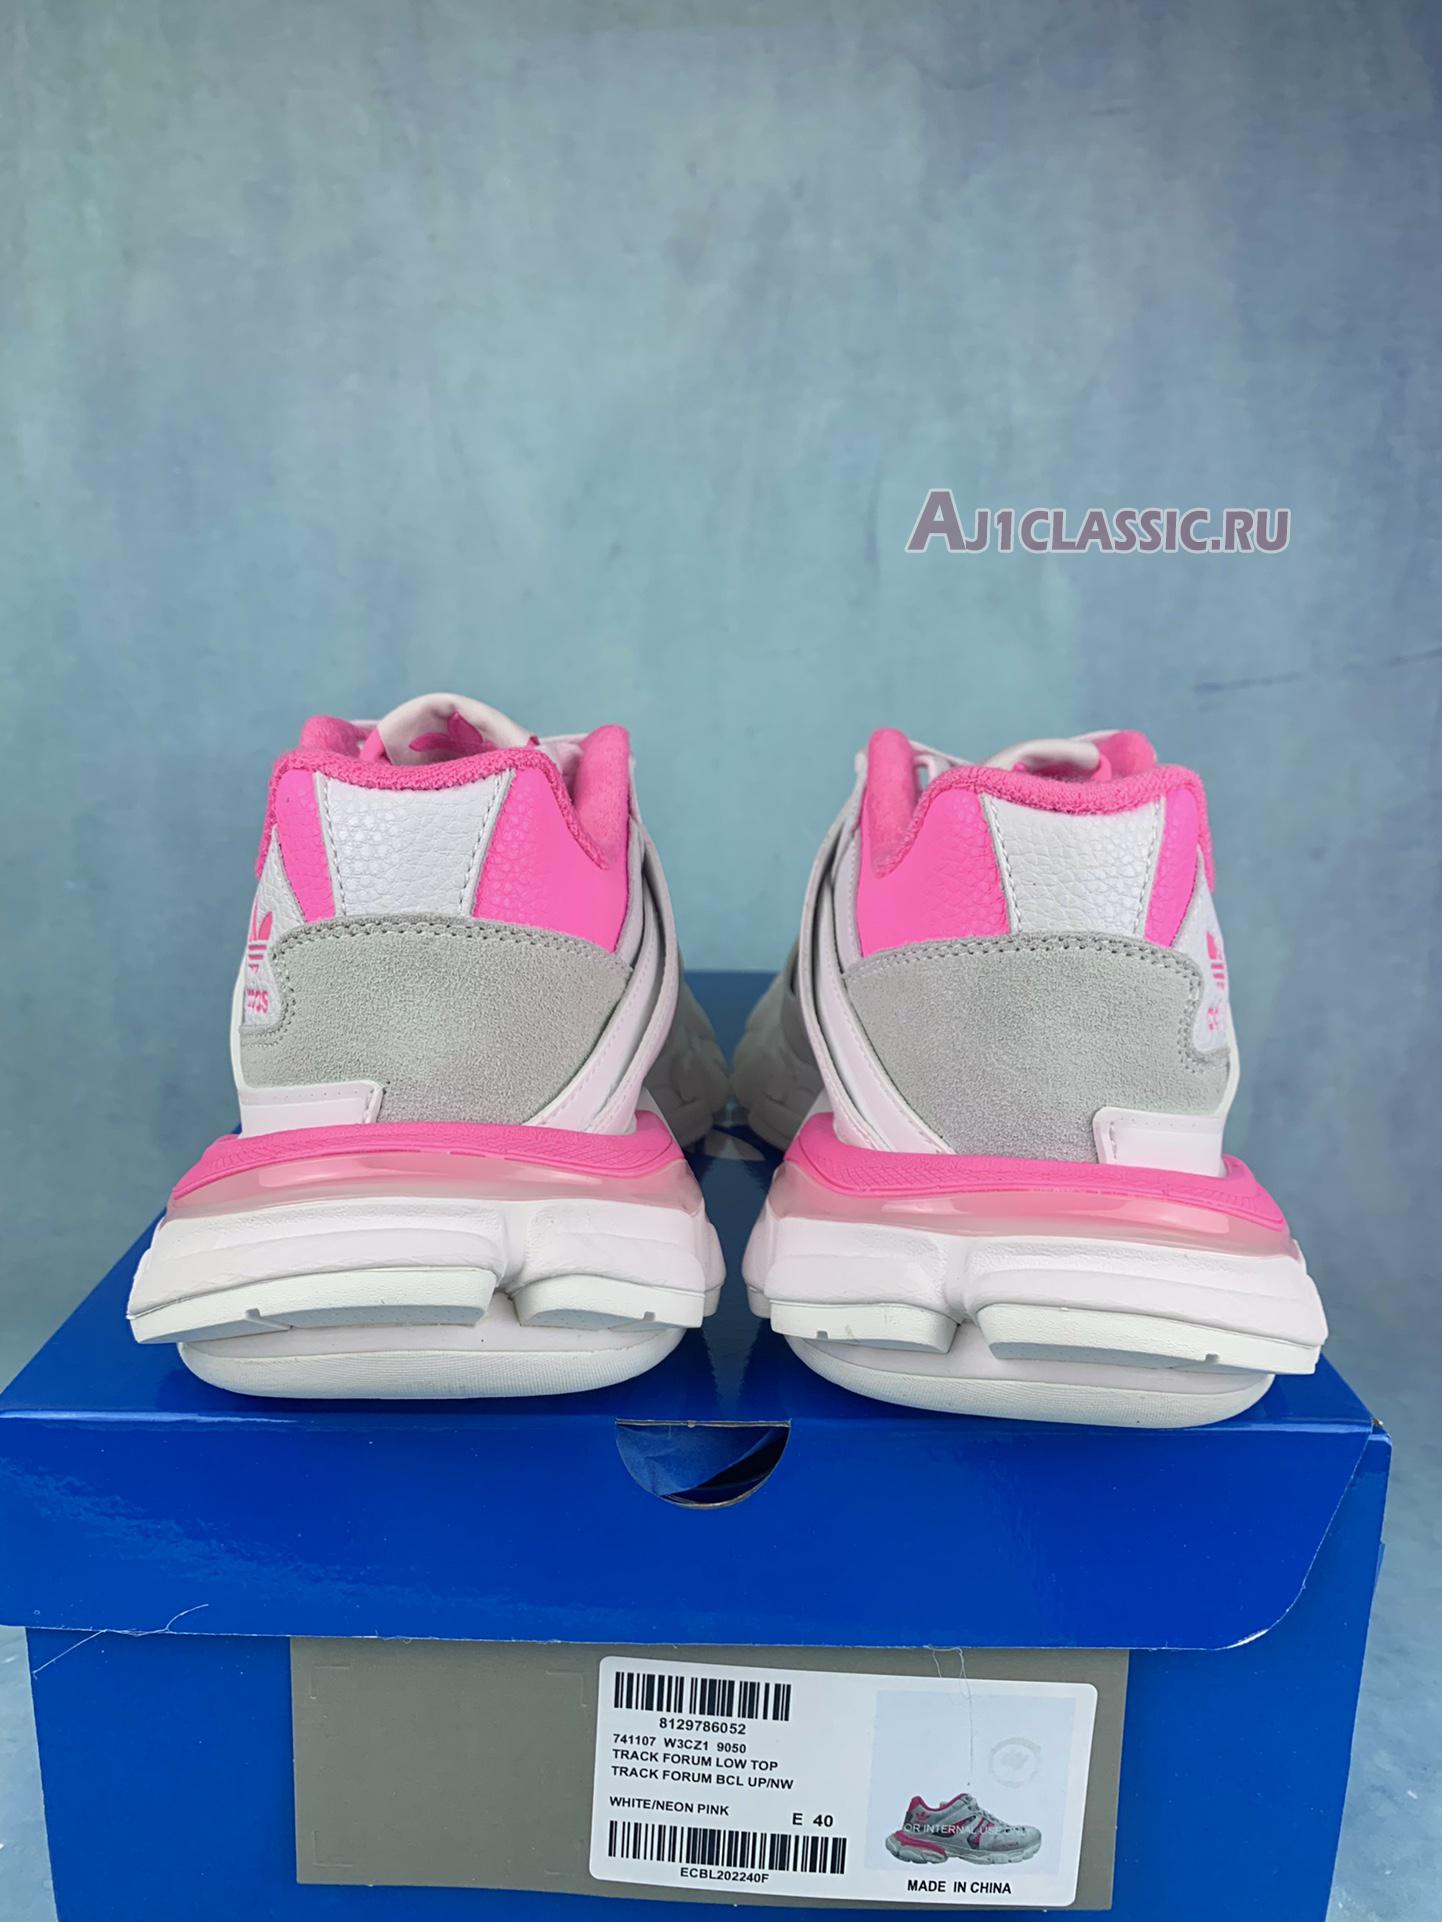 Balenciaga Adidas Track Forum Low Top Sneaker "White Neon Pink" 741106 W3CZ 19050